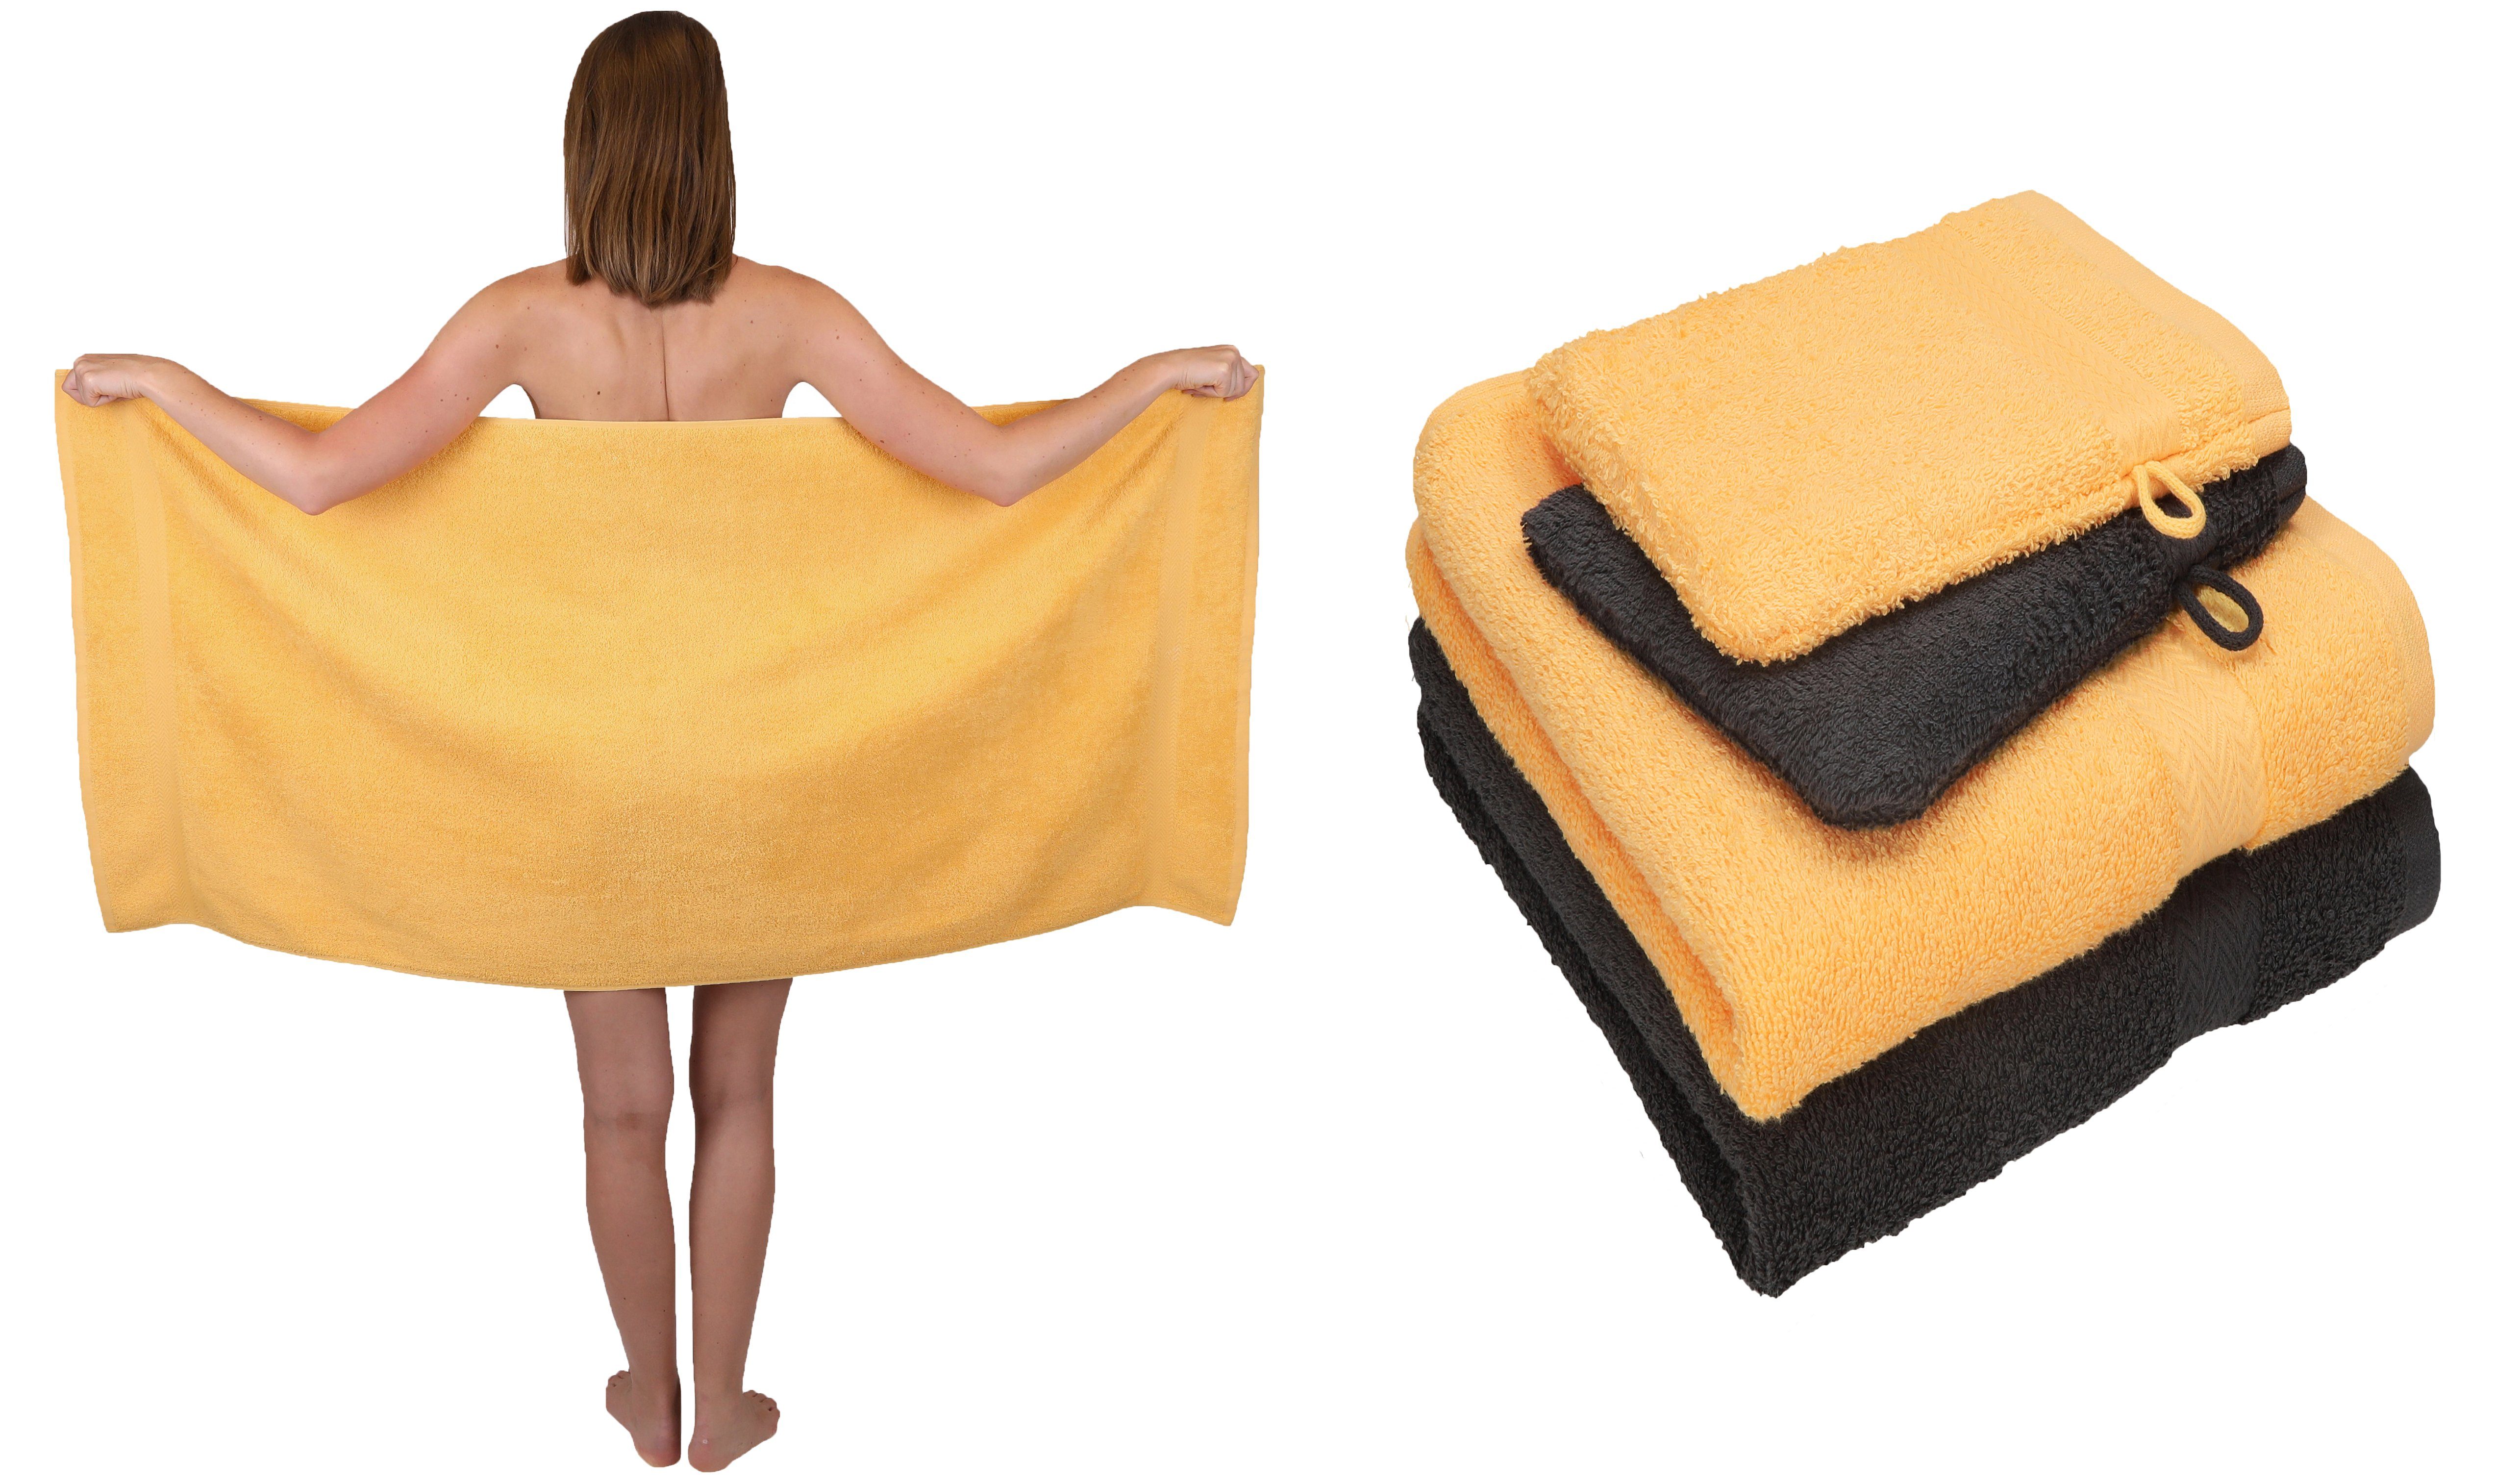 Betz Handtuch Set 5 TLG. Handtuch Set Single Pack 100% Baumwolle 1 Duschtuch 2 Handtücher 2 Waschhandschuhe, 100% Baumwolle honiggelb-graphit grau